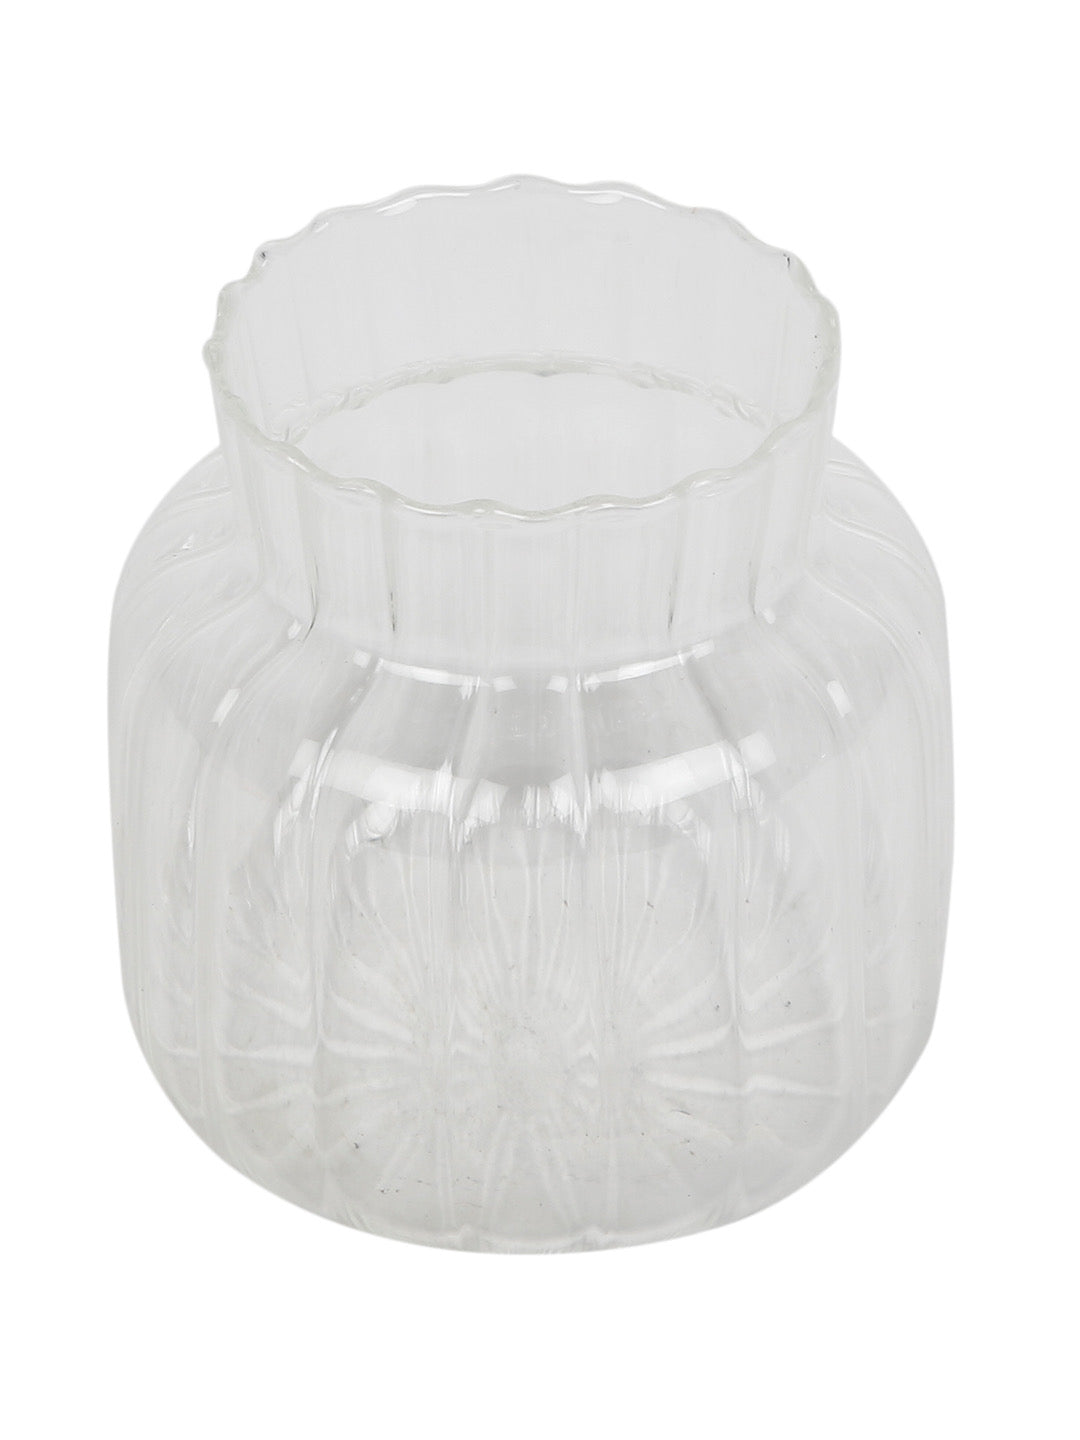 Transperant Glass Flower Bud Vase - Default Title (VAS21013)